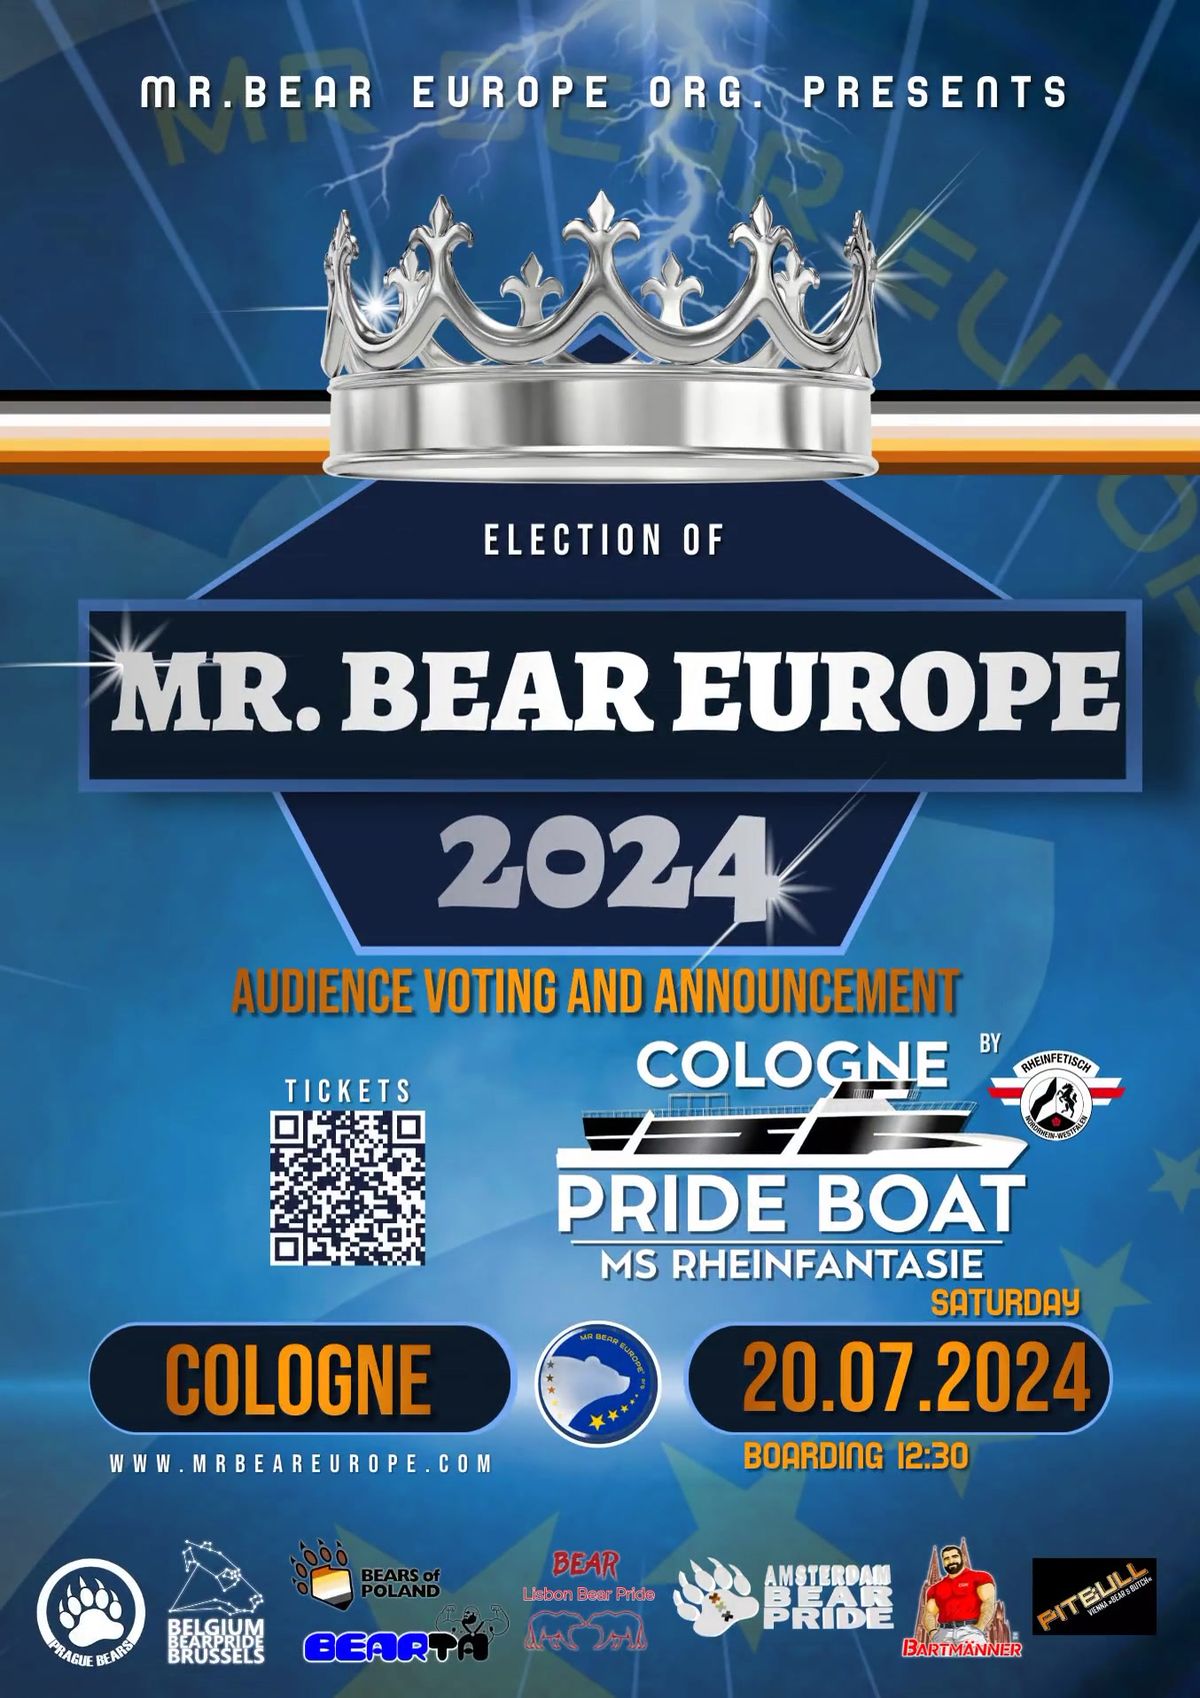 MR. BEAR EUROPE 2024 Election - Announcement